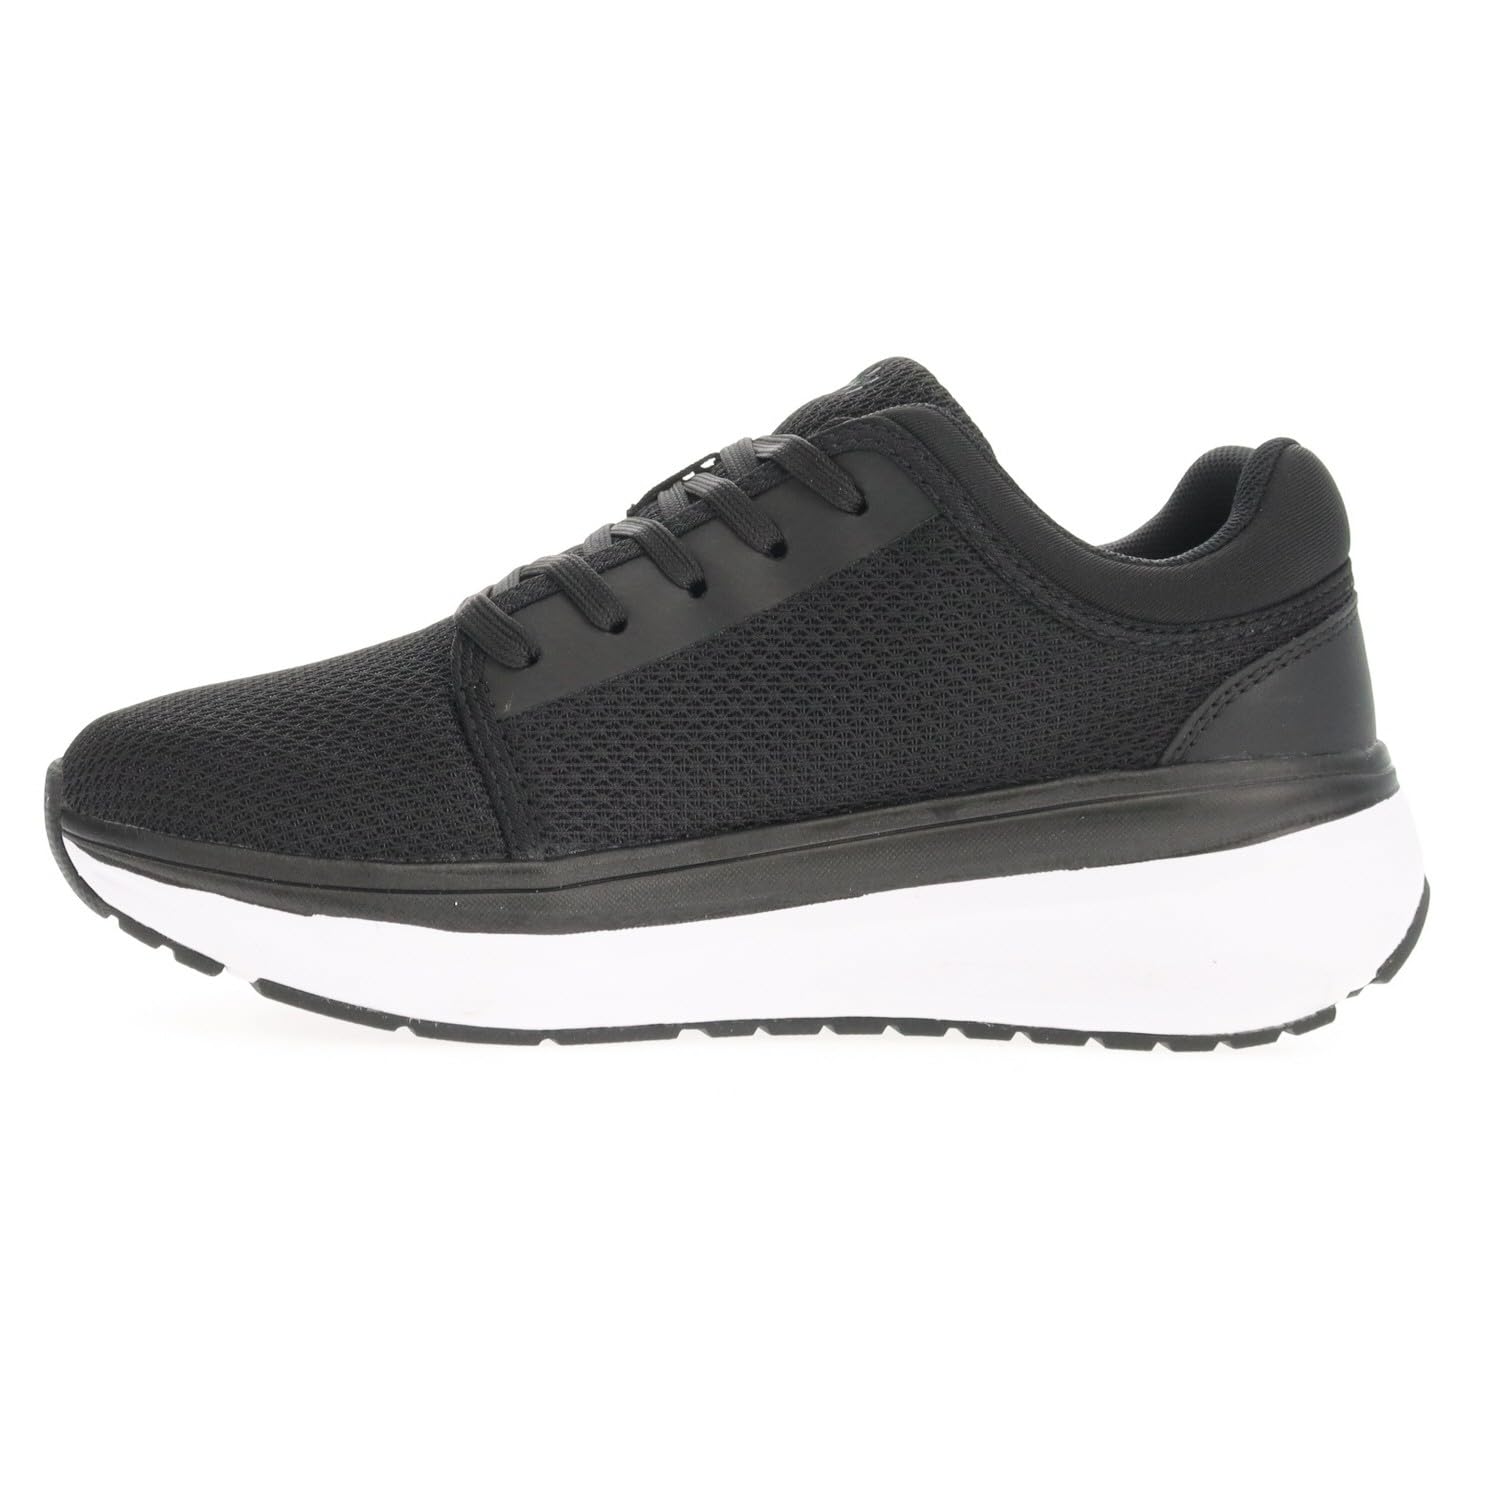 Propet Womens Ultima X Walking Sneakers Shoes - Black